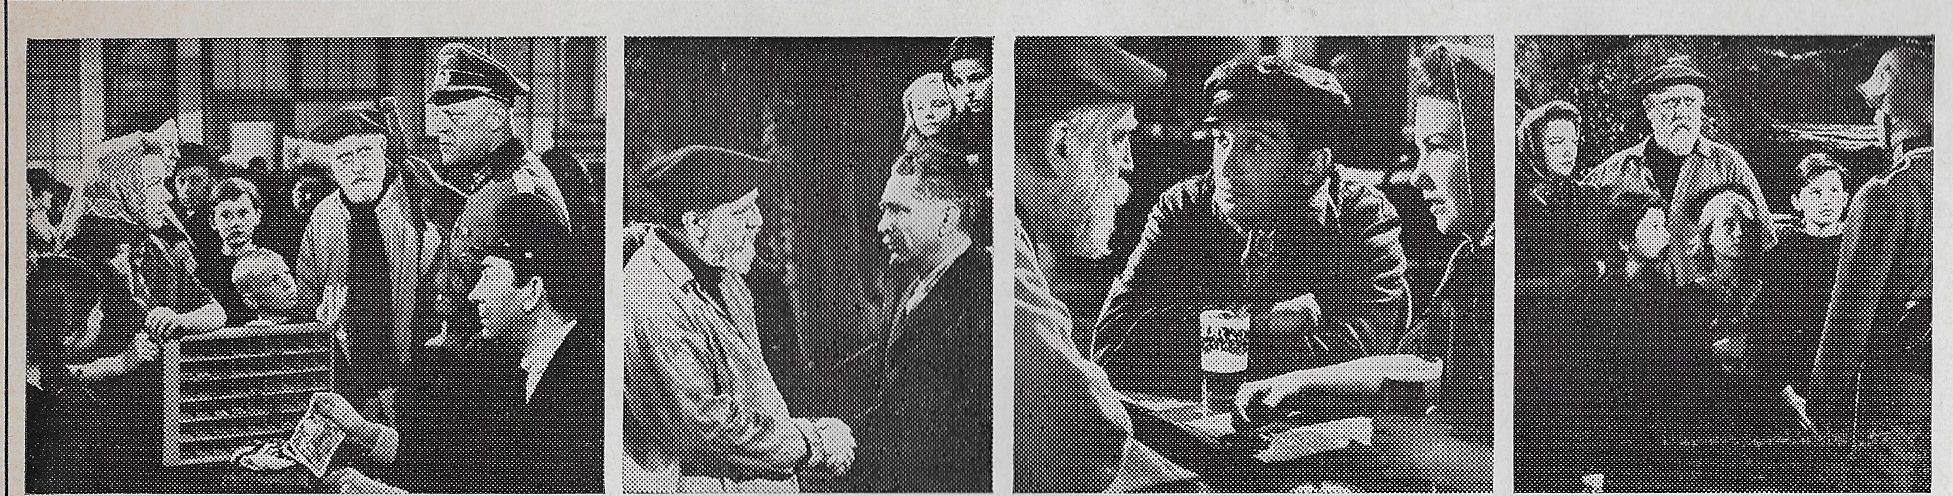 The Pied Piper (1942) Screenshot 2 